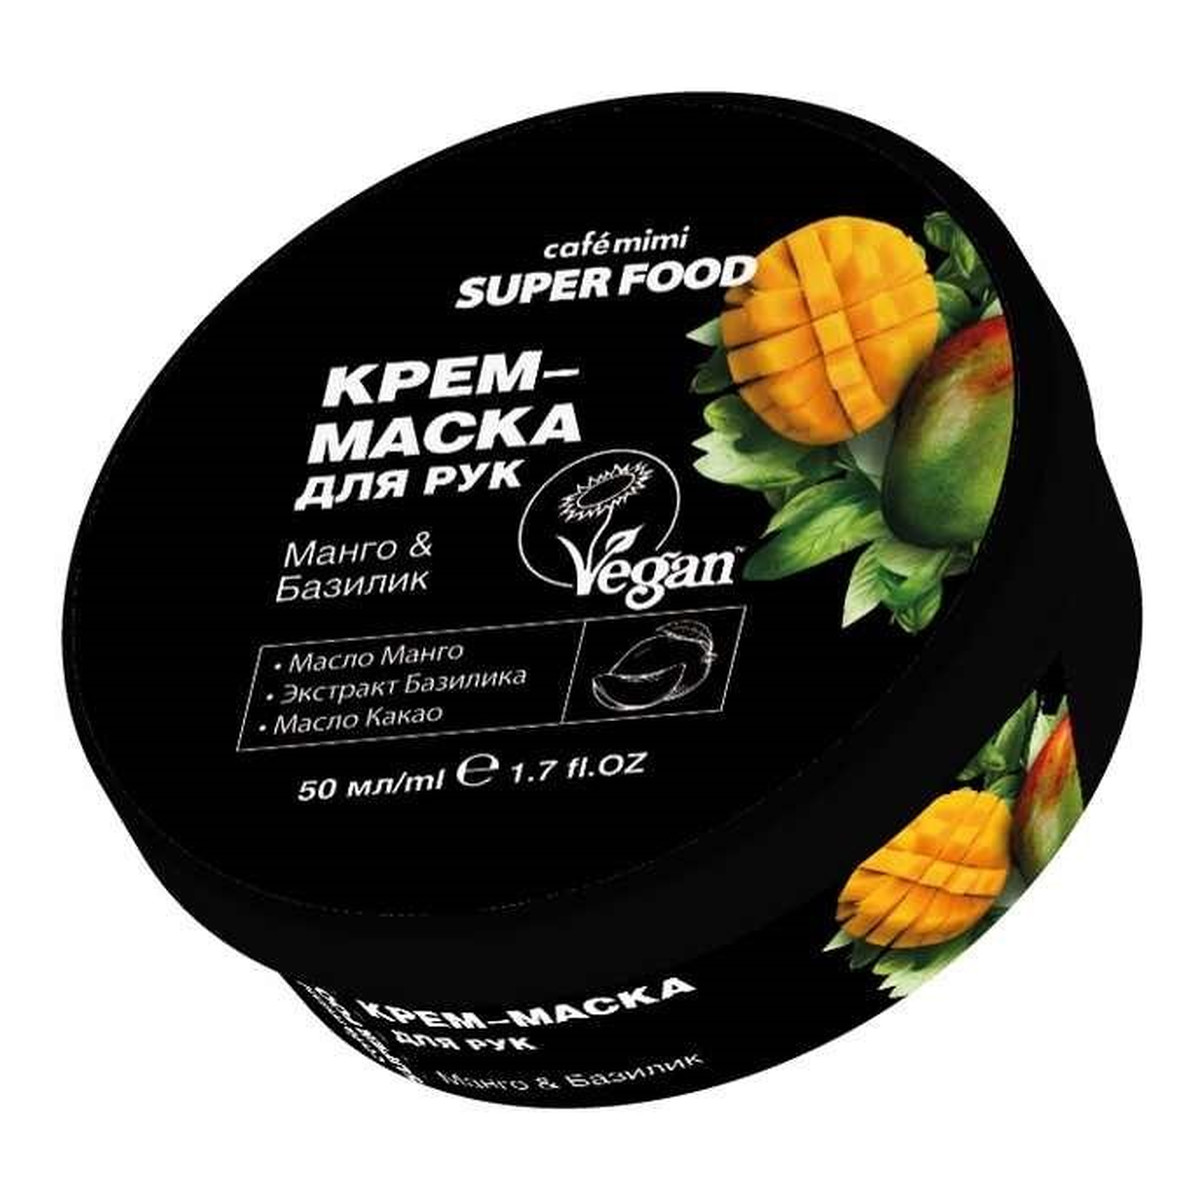 Le Cafe de Beaute Cafe Mimi Superfood Krem - maska do rąk mango i bazylia 50ml